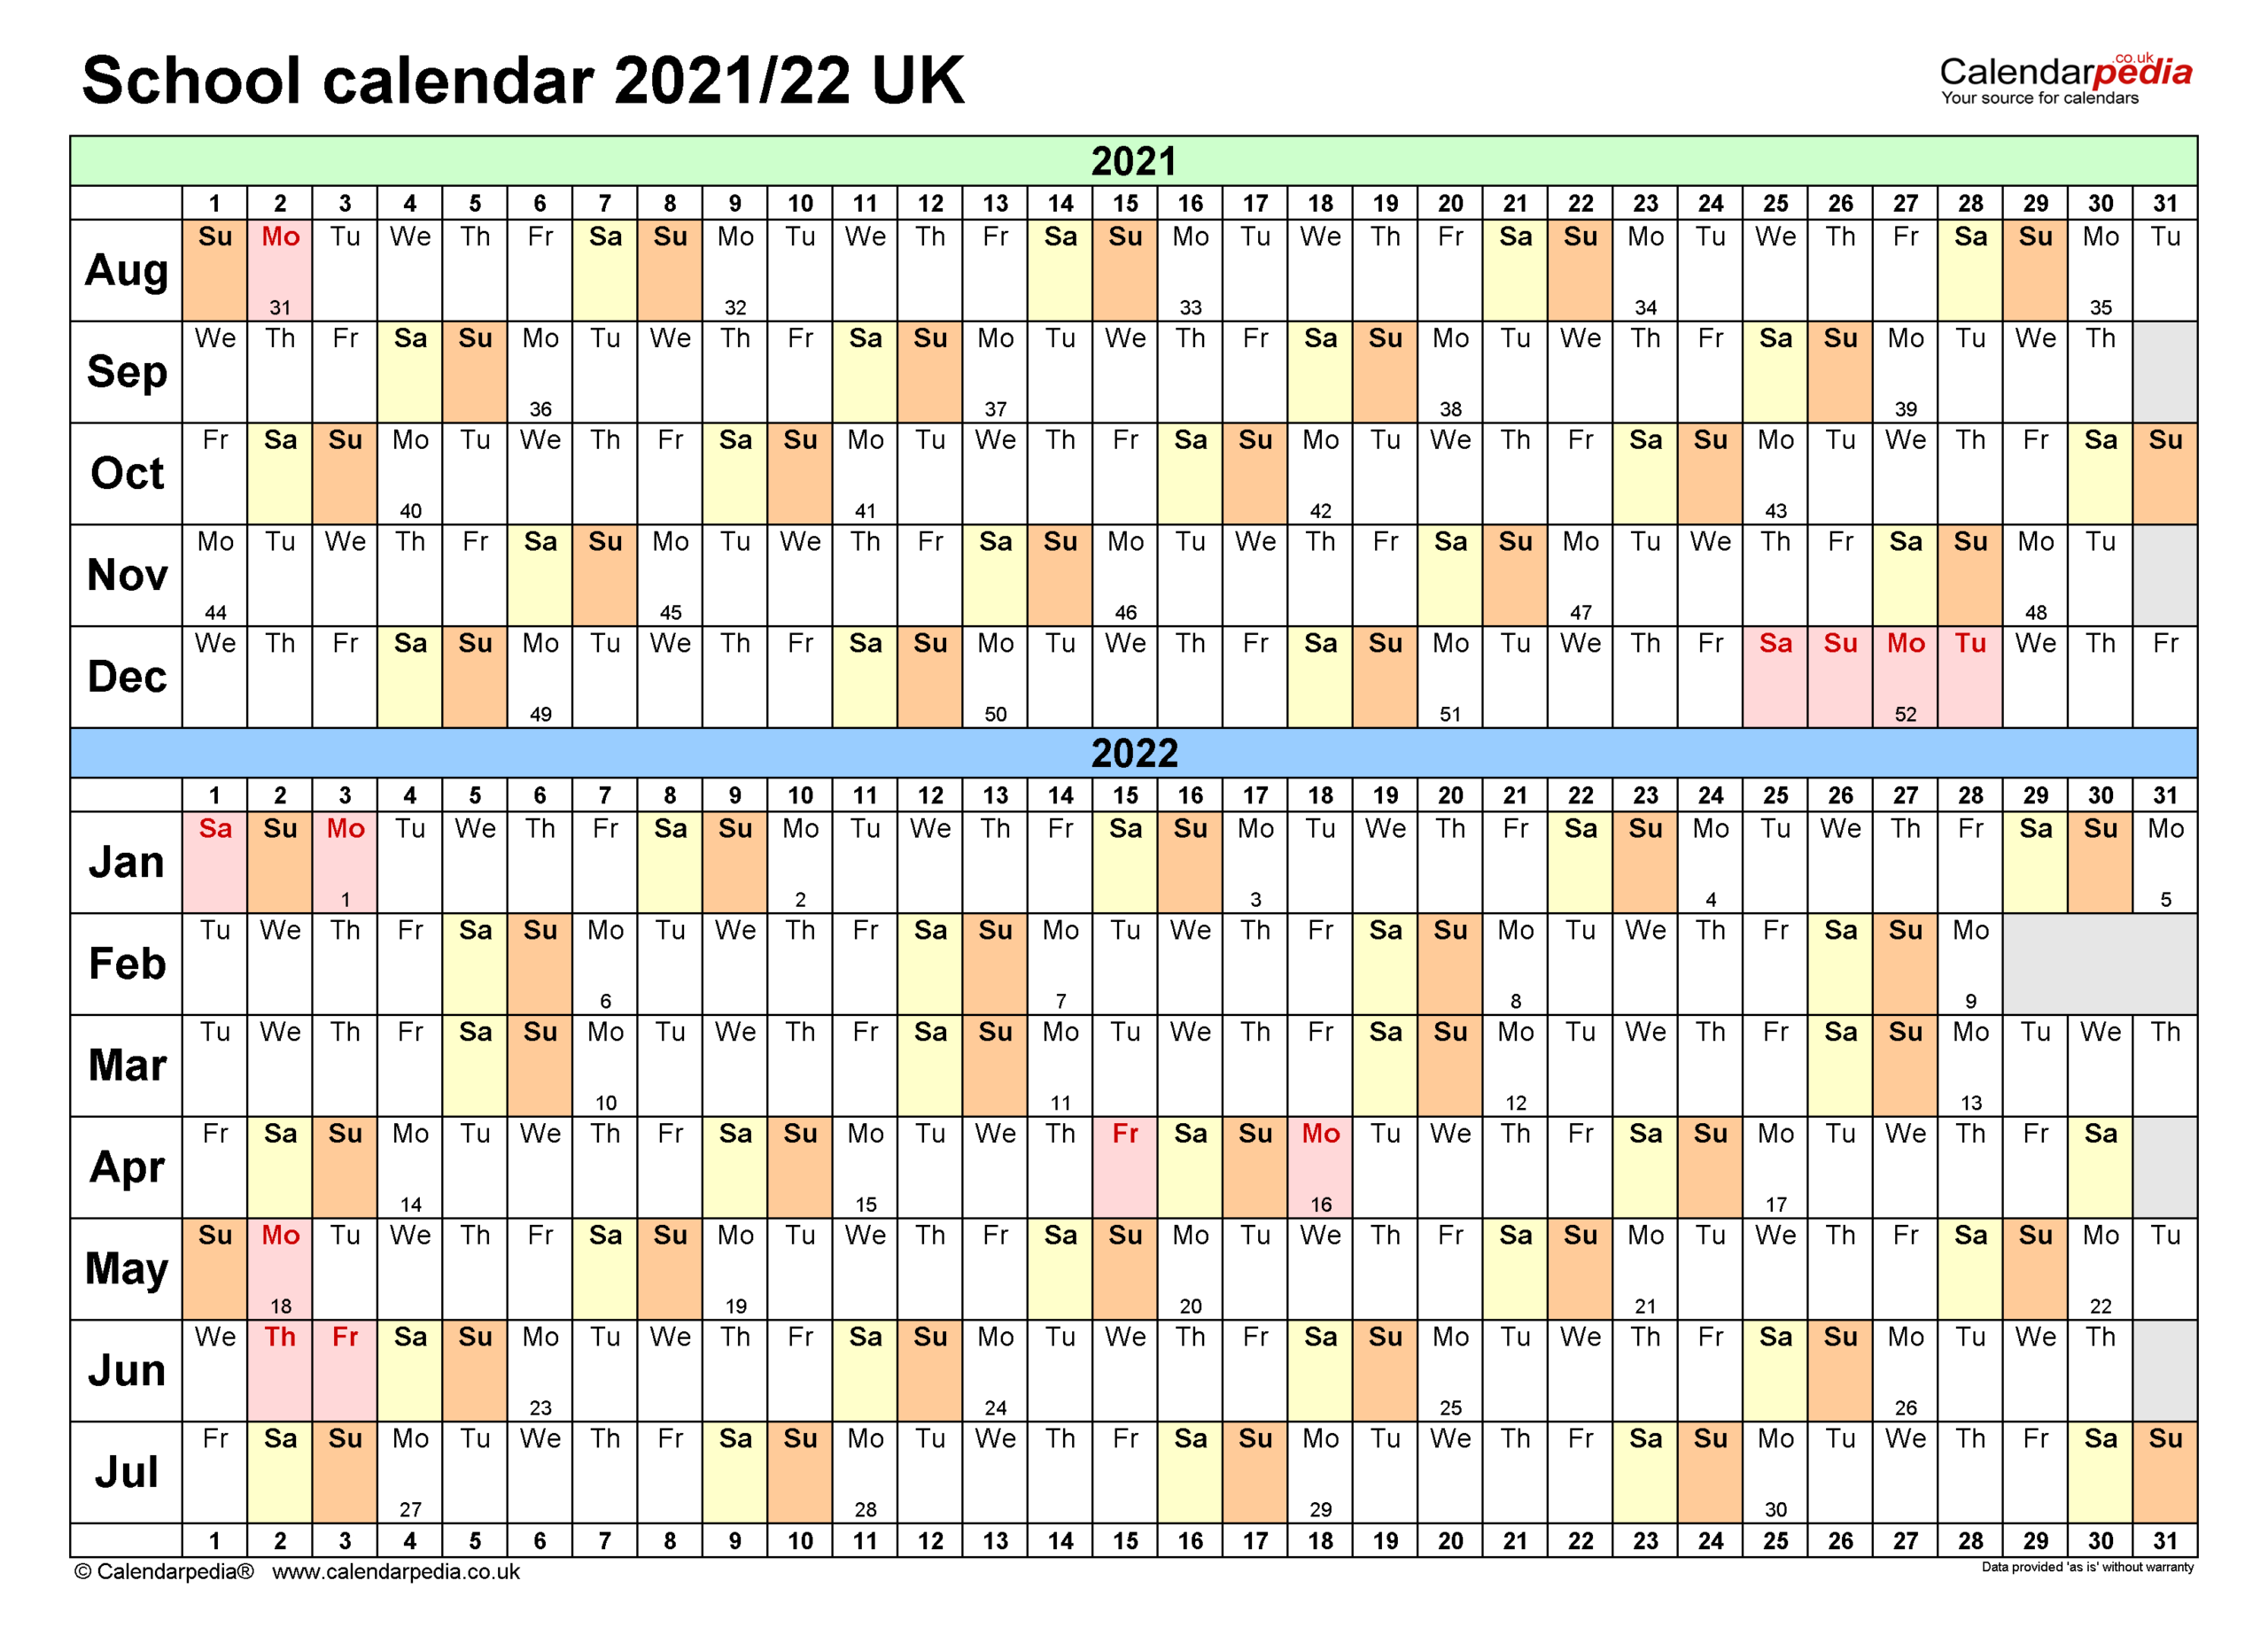 Take July 22 2022 Calendar